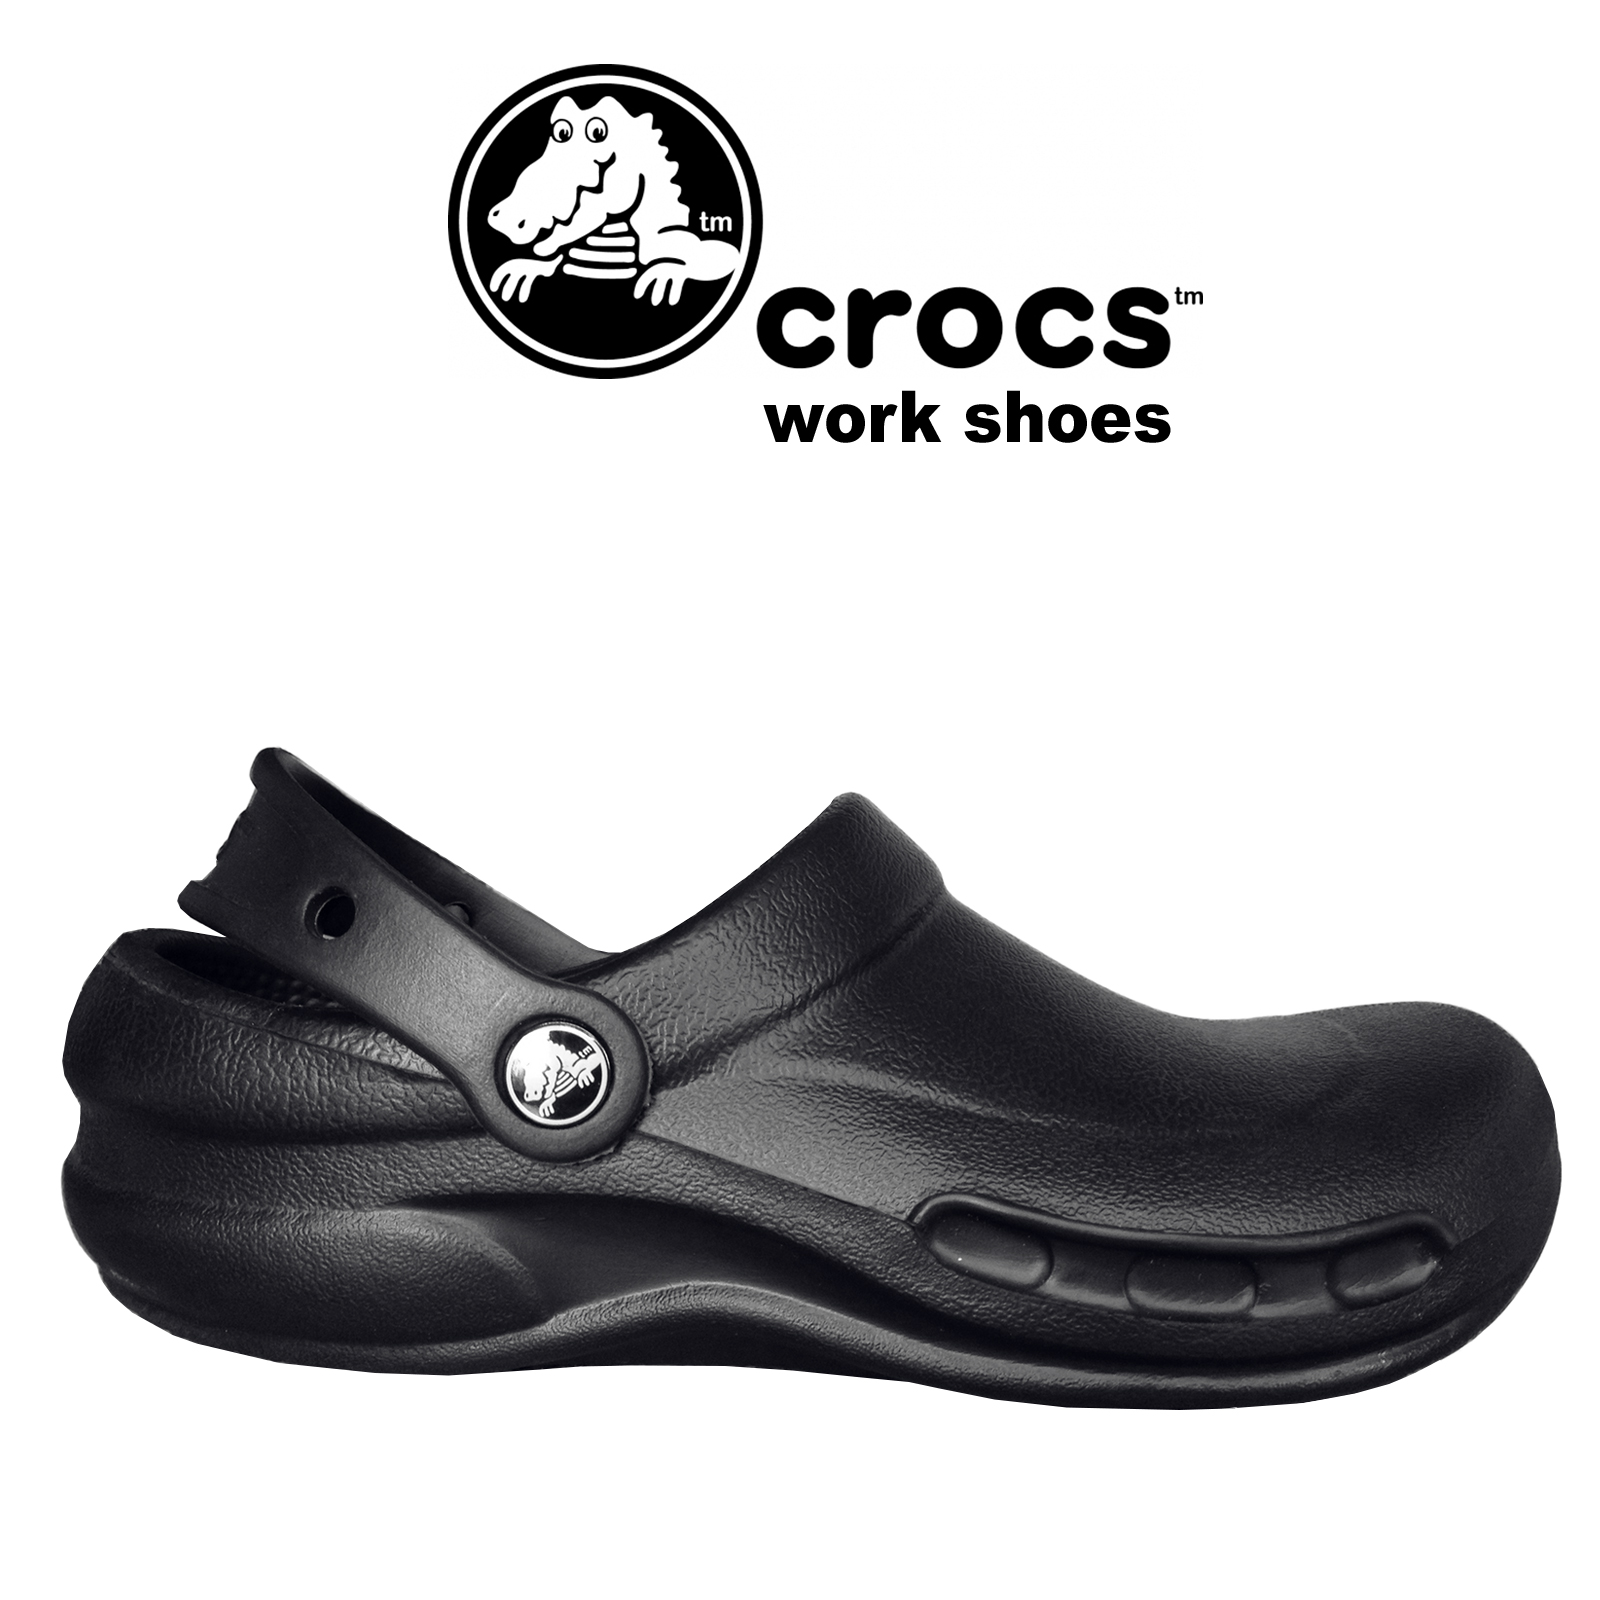 crocs at work shoes